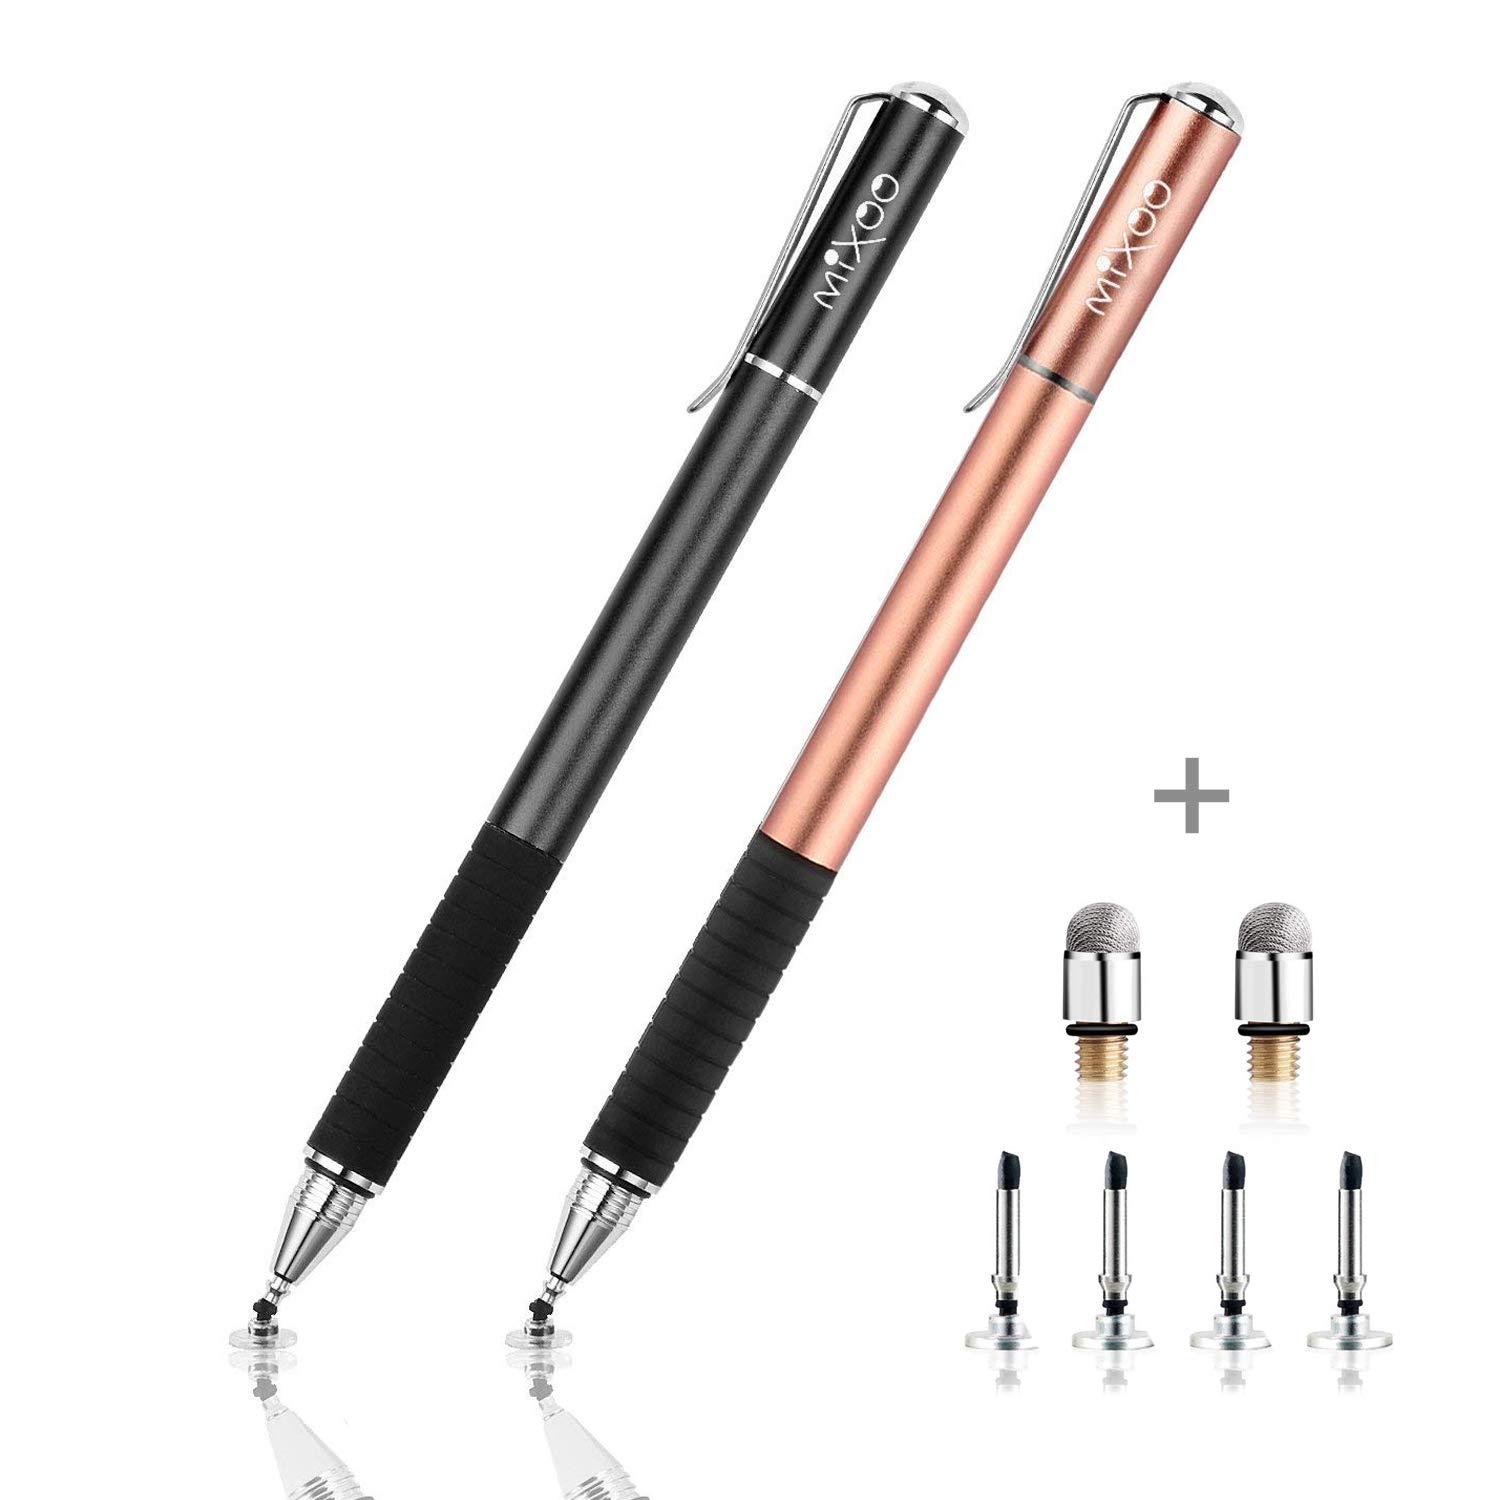 MIXO capacitive stylus pen